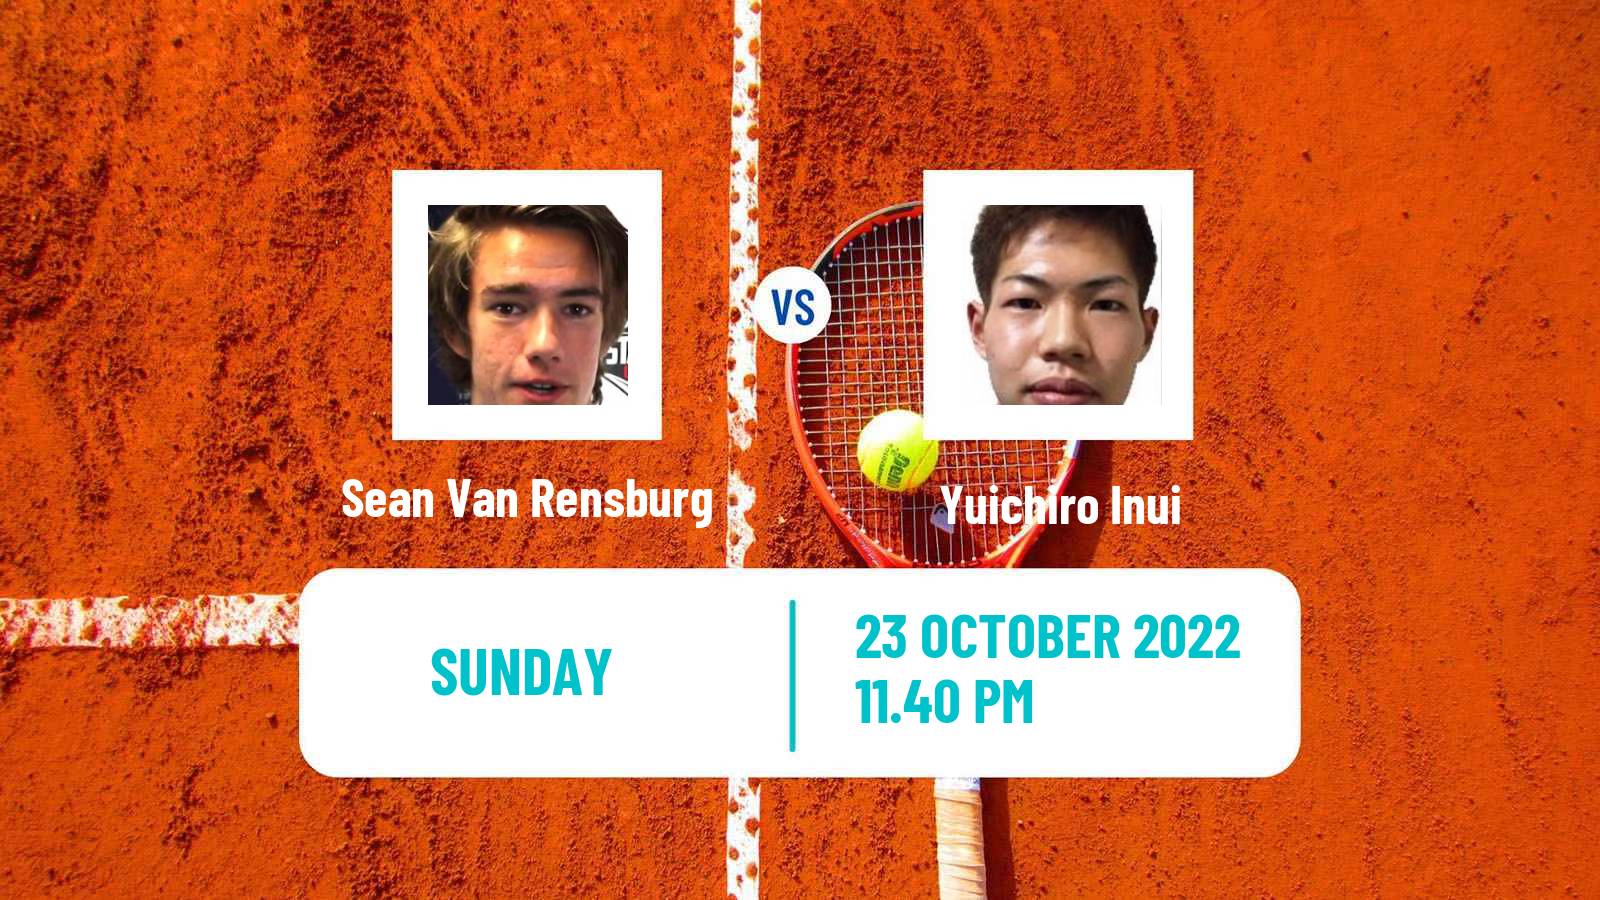 Tennis ATP Challenger Sean Van Rensburg - Yuichiro Inui